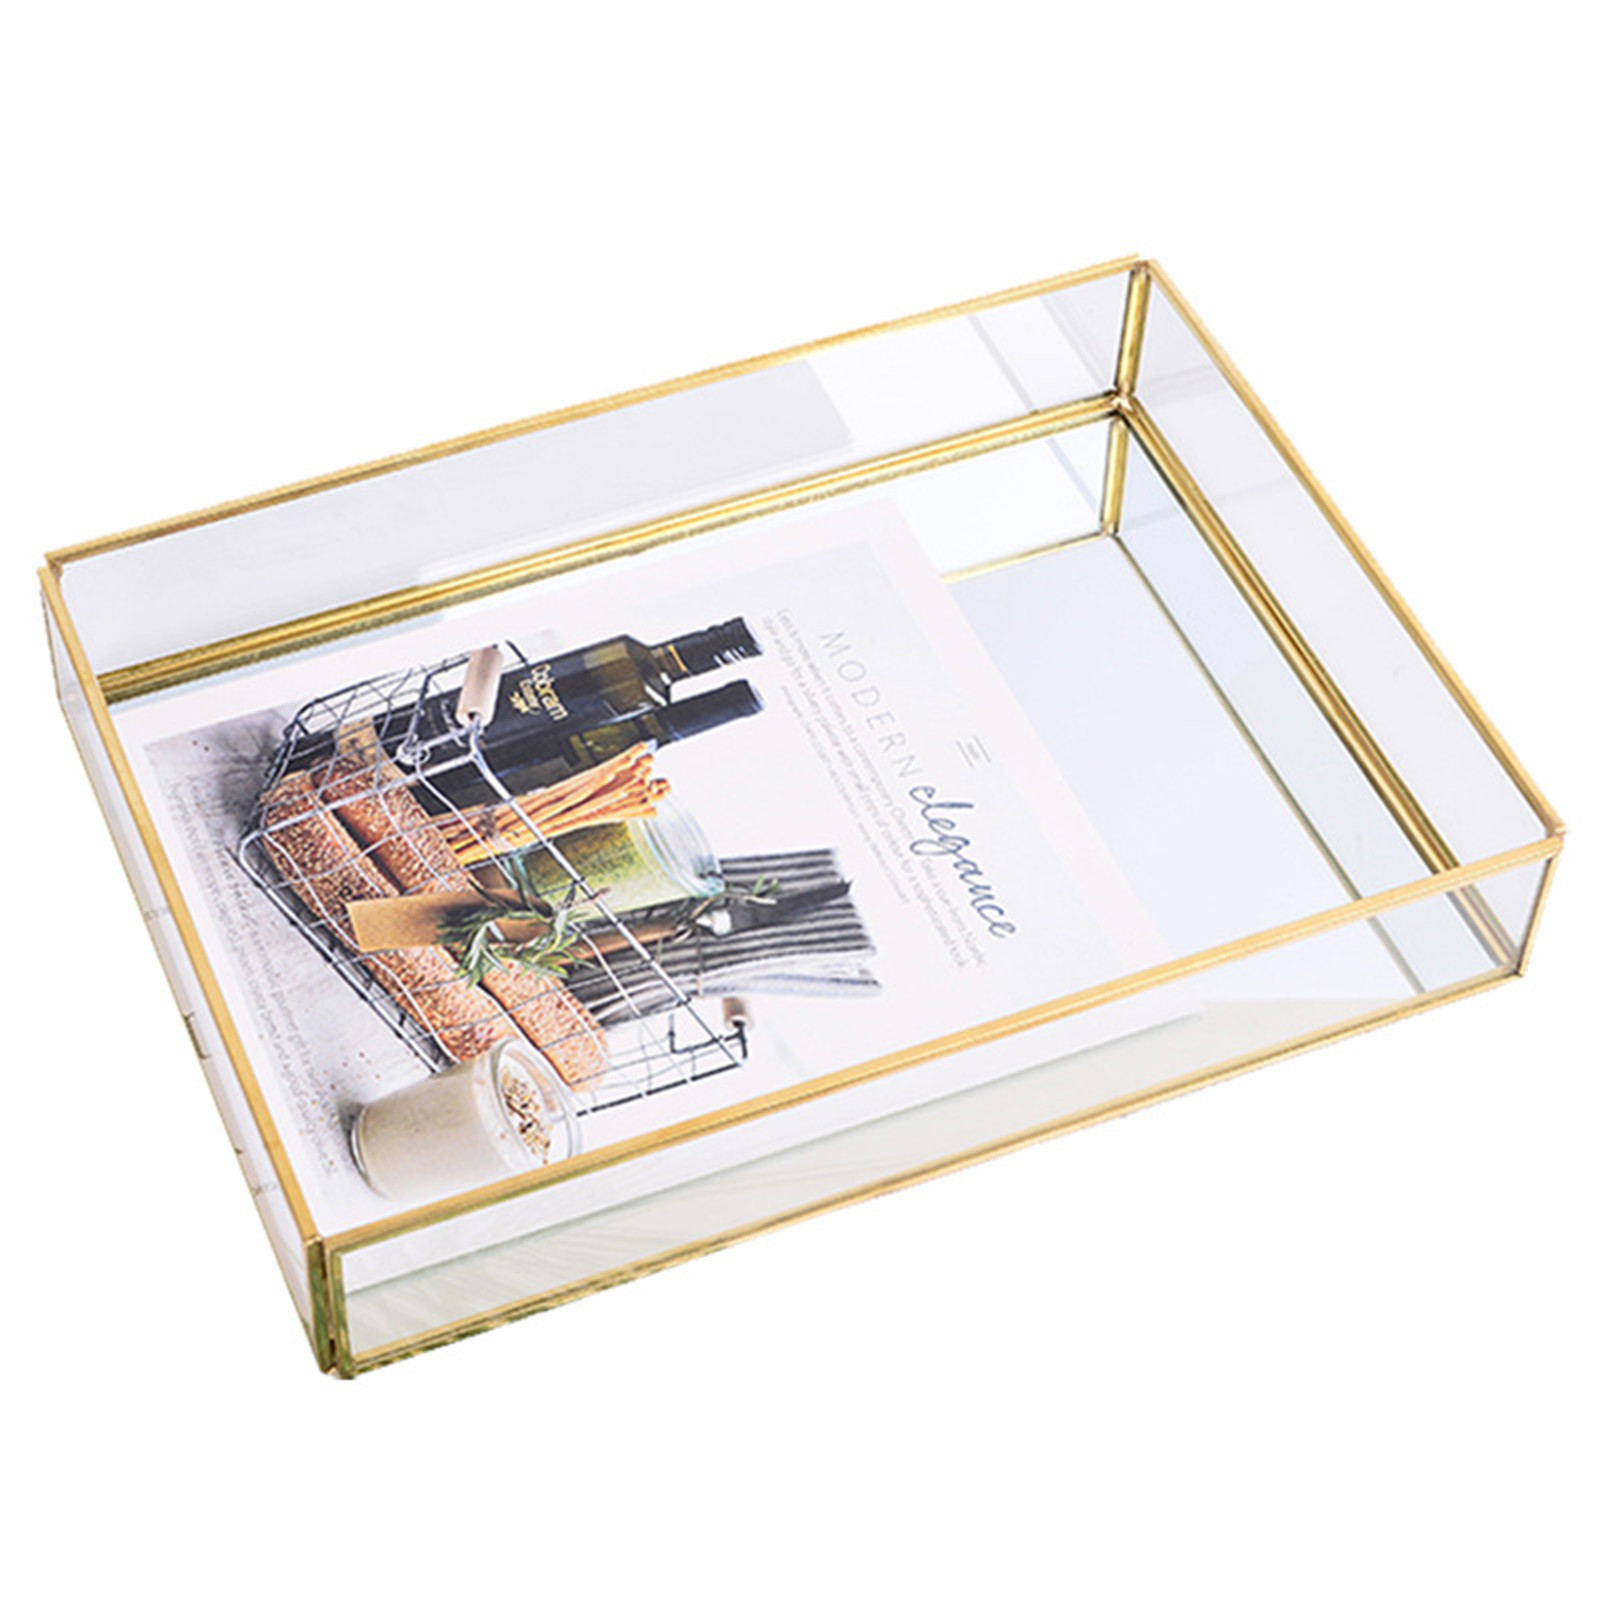 40# Nordic Retro Storage Tray Gold Rectangle Glass Makeup Organizer Tray Dessert Plate Jewelry Display Home Kitchen Decor